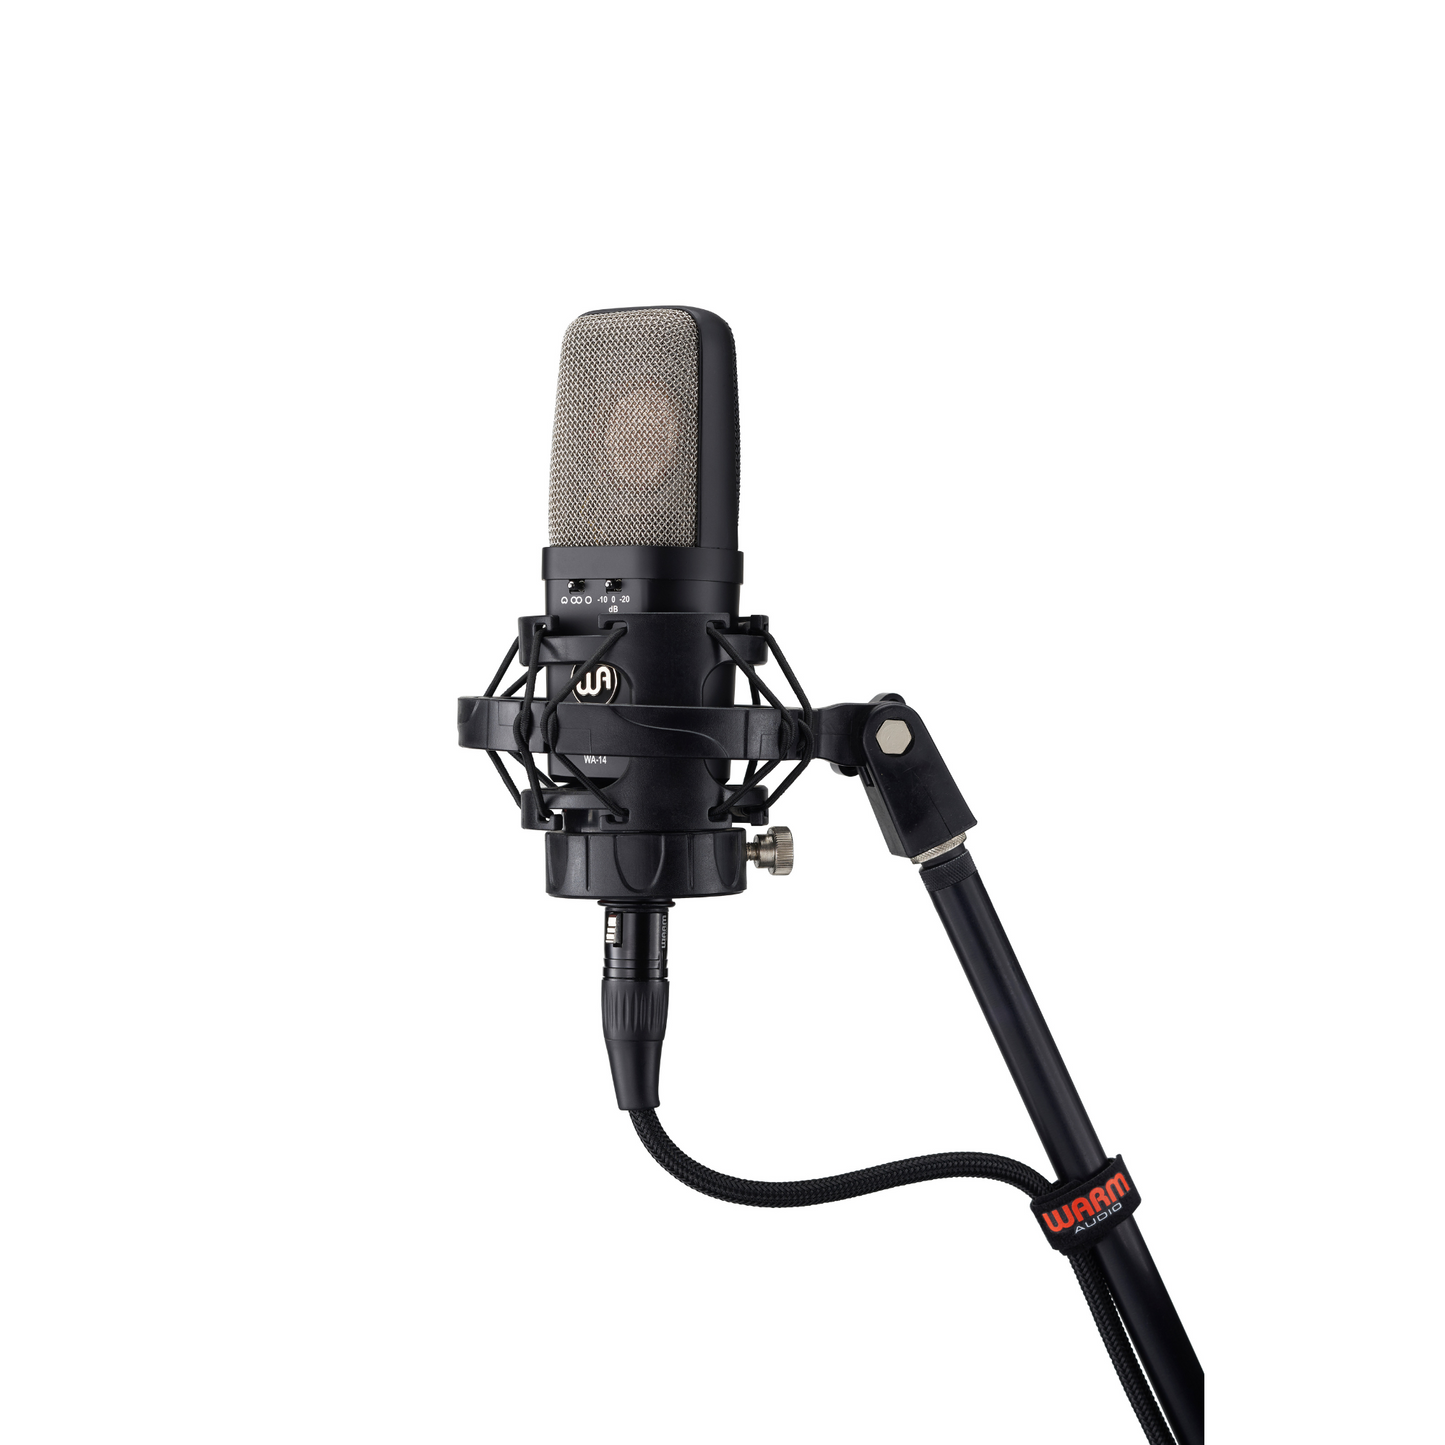 Warm Audio WA-14 Large-diaphragm Condenser Microphone